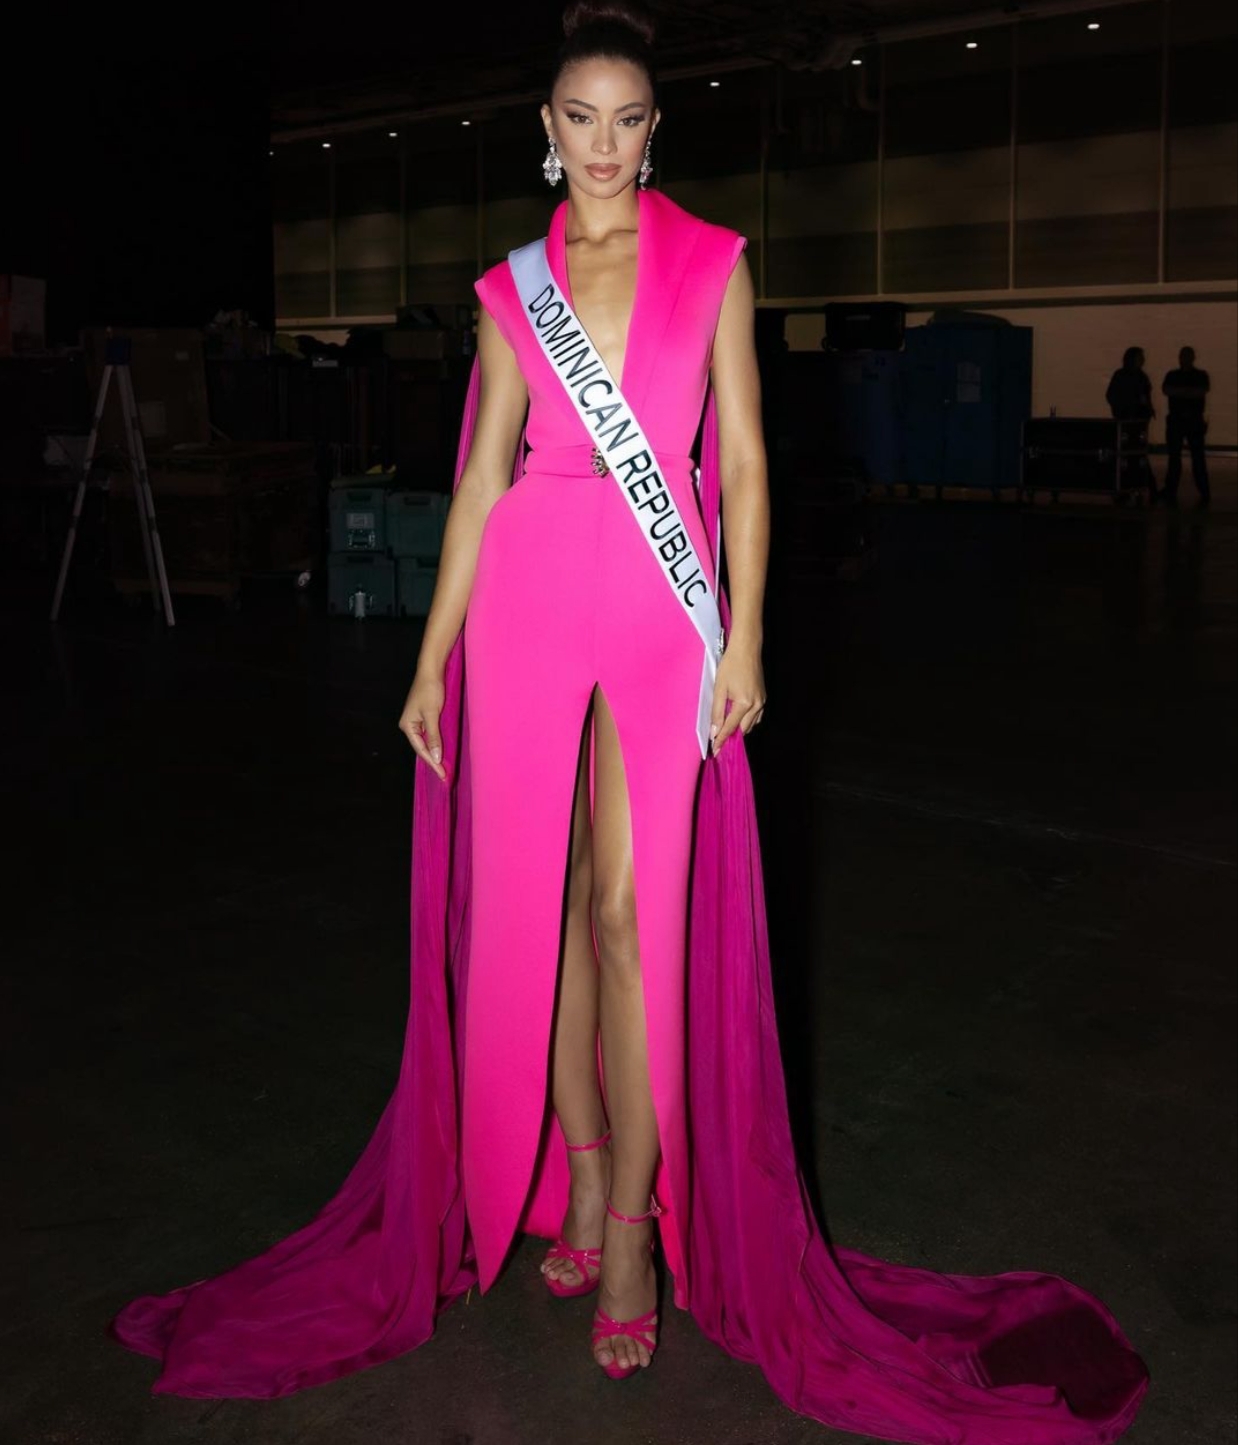 Andreína Martínez enters the Top 16 of Miss Universe 2022